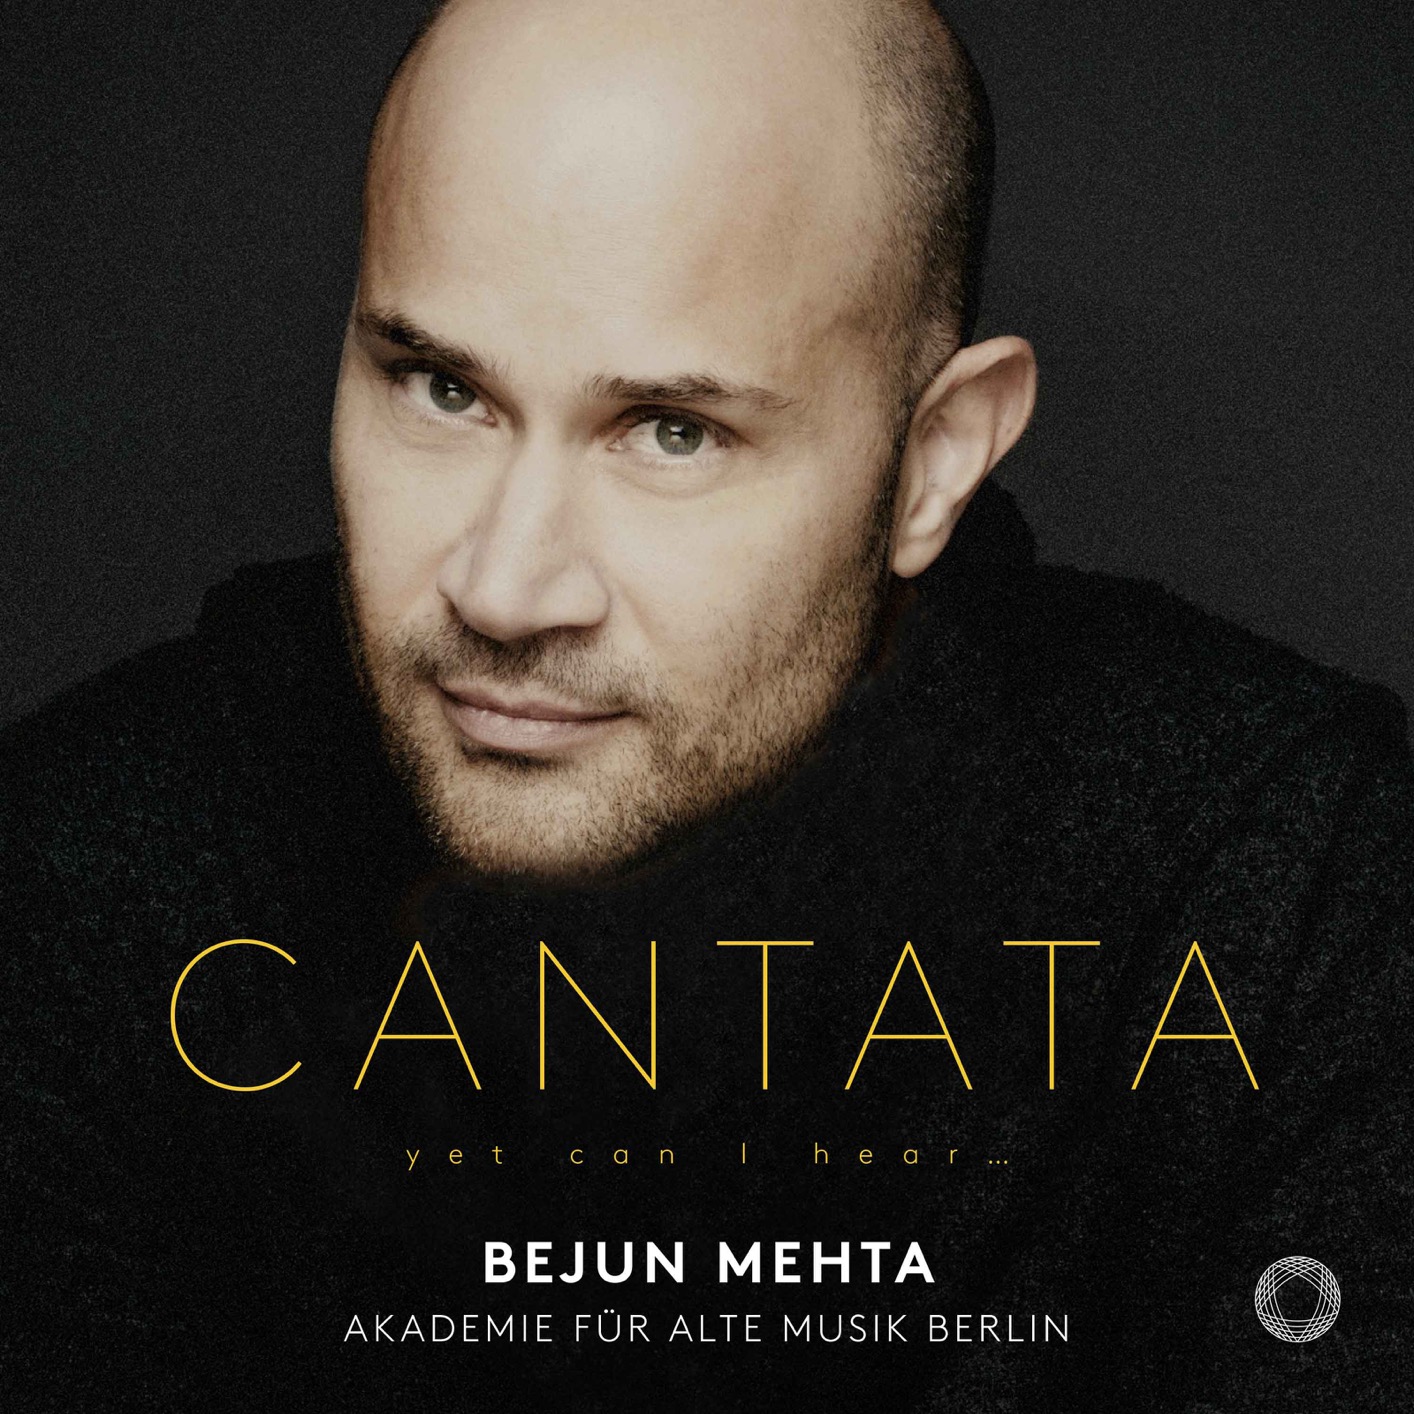 Bejun Mehta & Akademie fur Alte Musik Berlin - Cantata Yet Can I Hear… (2018) [FLAC 24bit/96kHz]